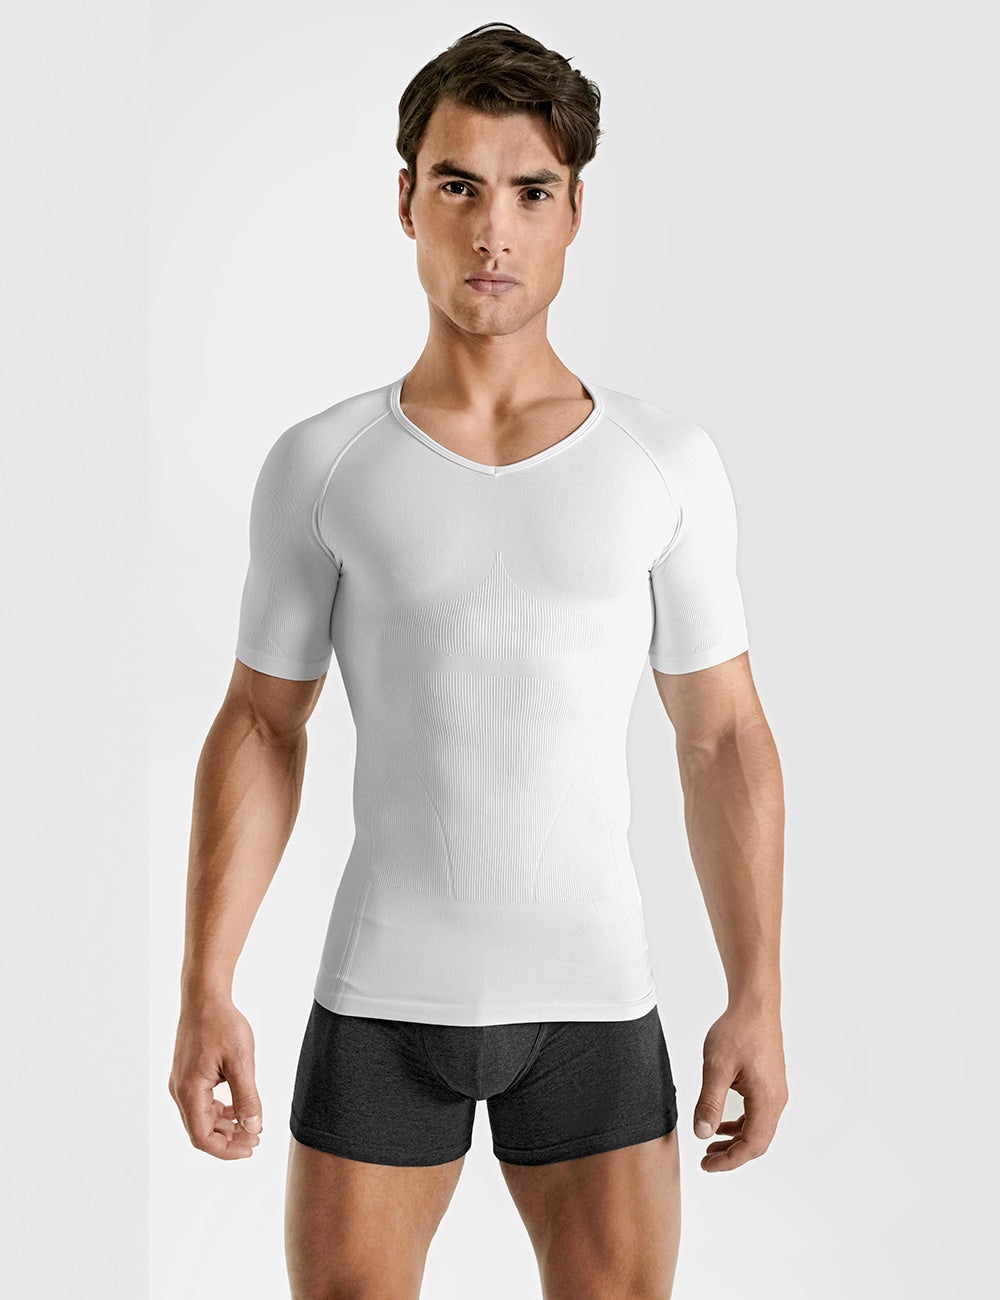 Rounderbum COMPRESSION Tech - Men Underwear, Shapewear, Swimwear –  Rounderbum LLC